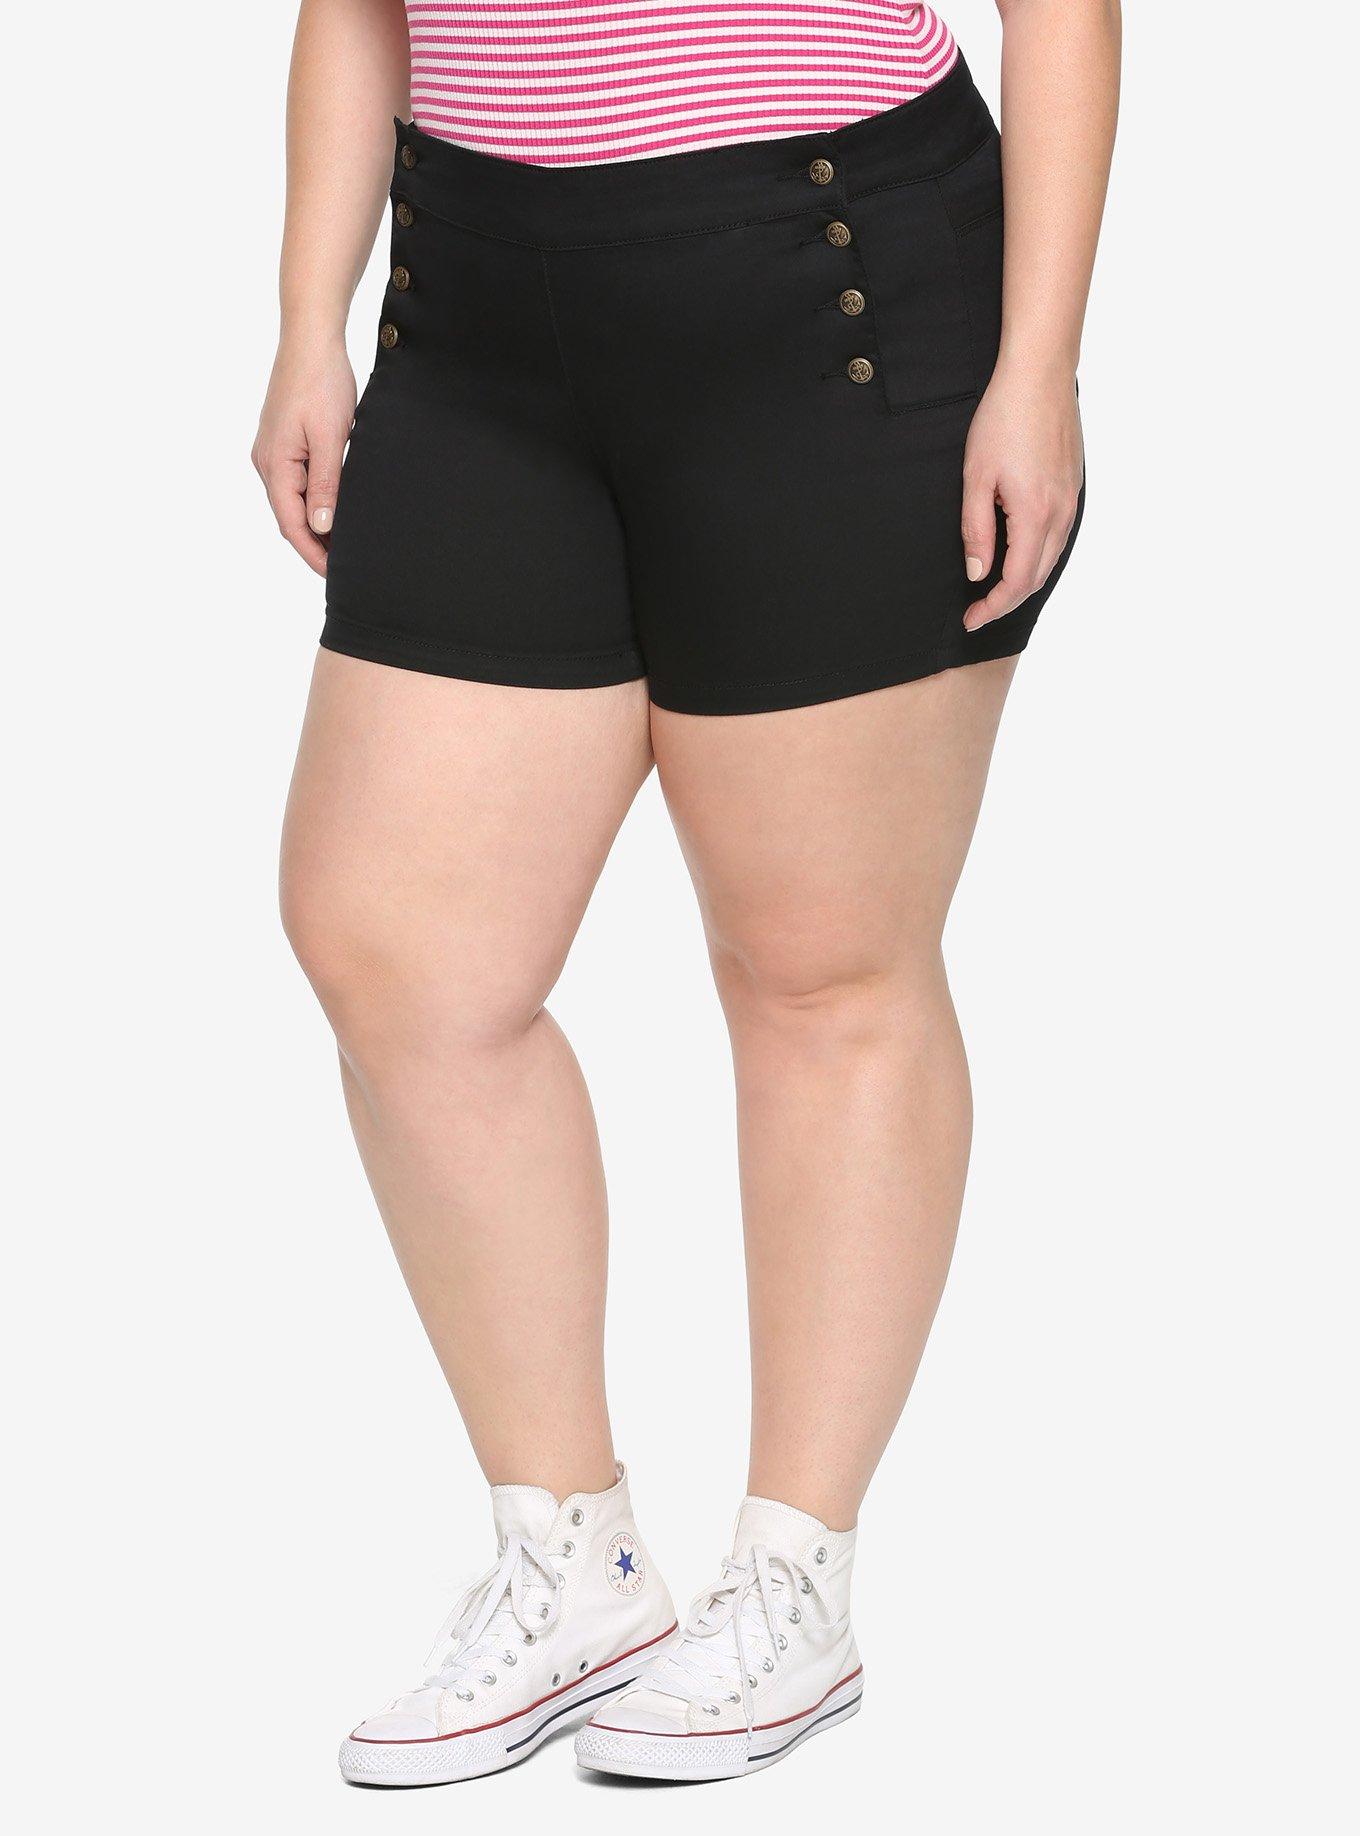 Black High-Waisted Sailor Shorts Plus Size, BLACK, hi-res